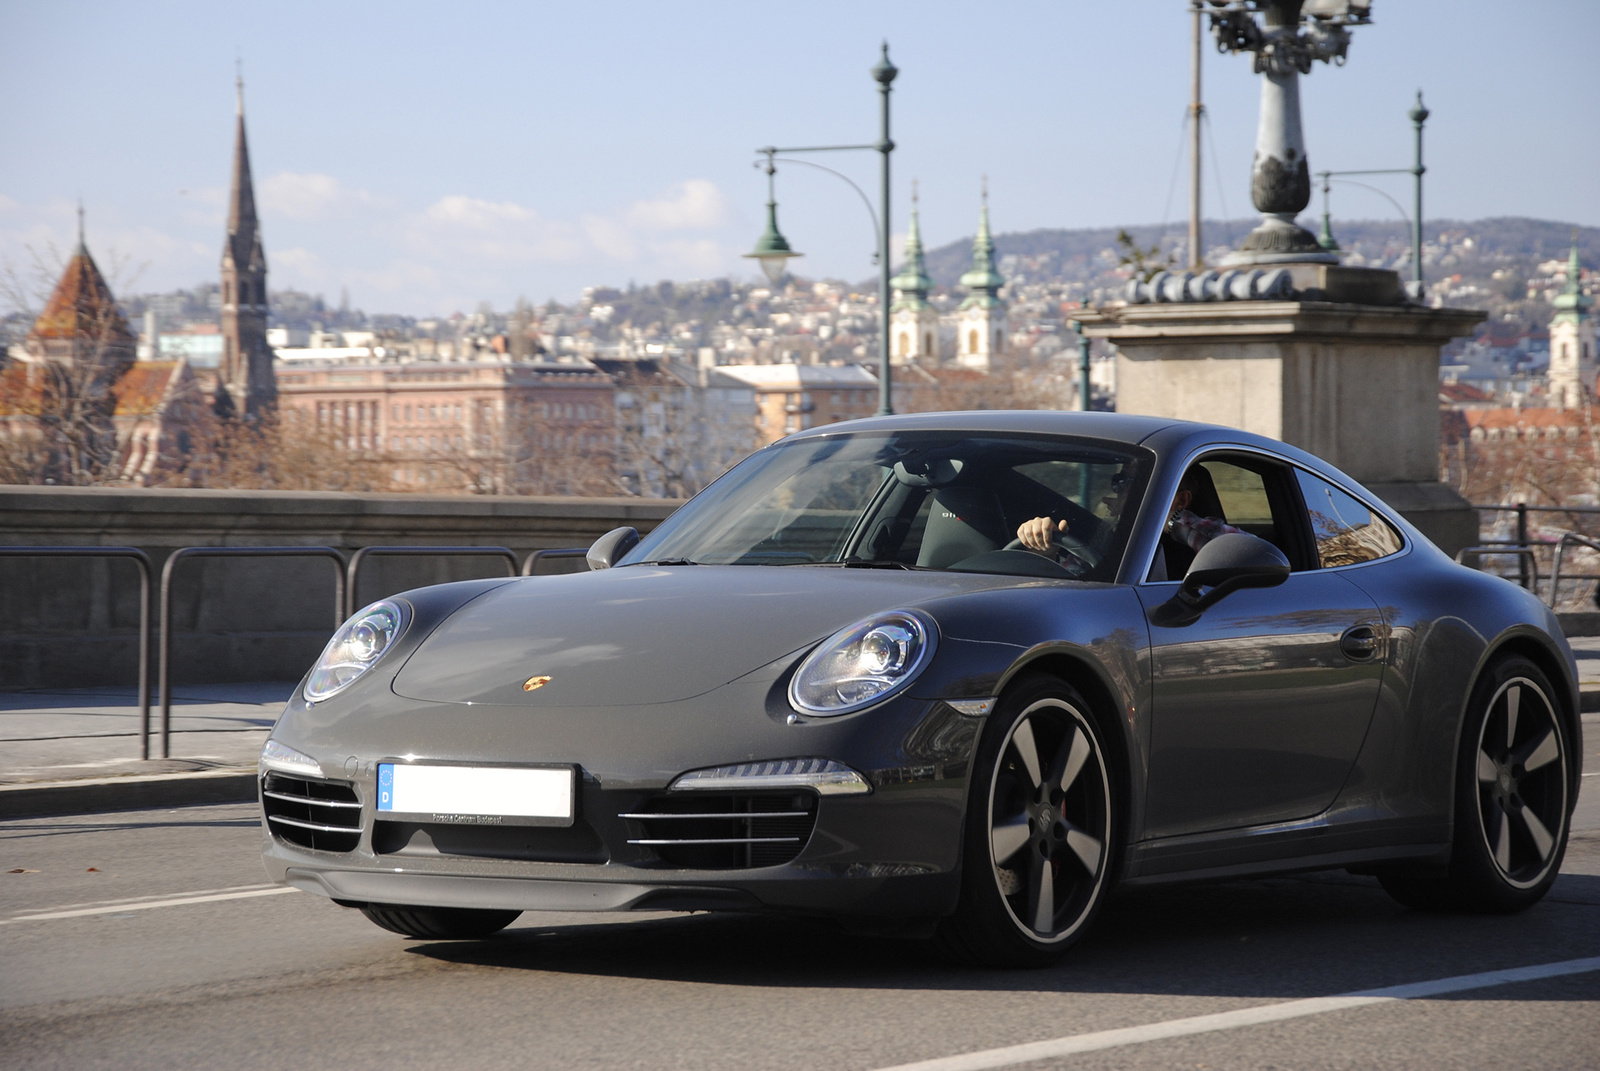 Porsche 911 50th Anniversary